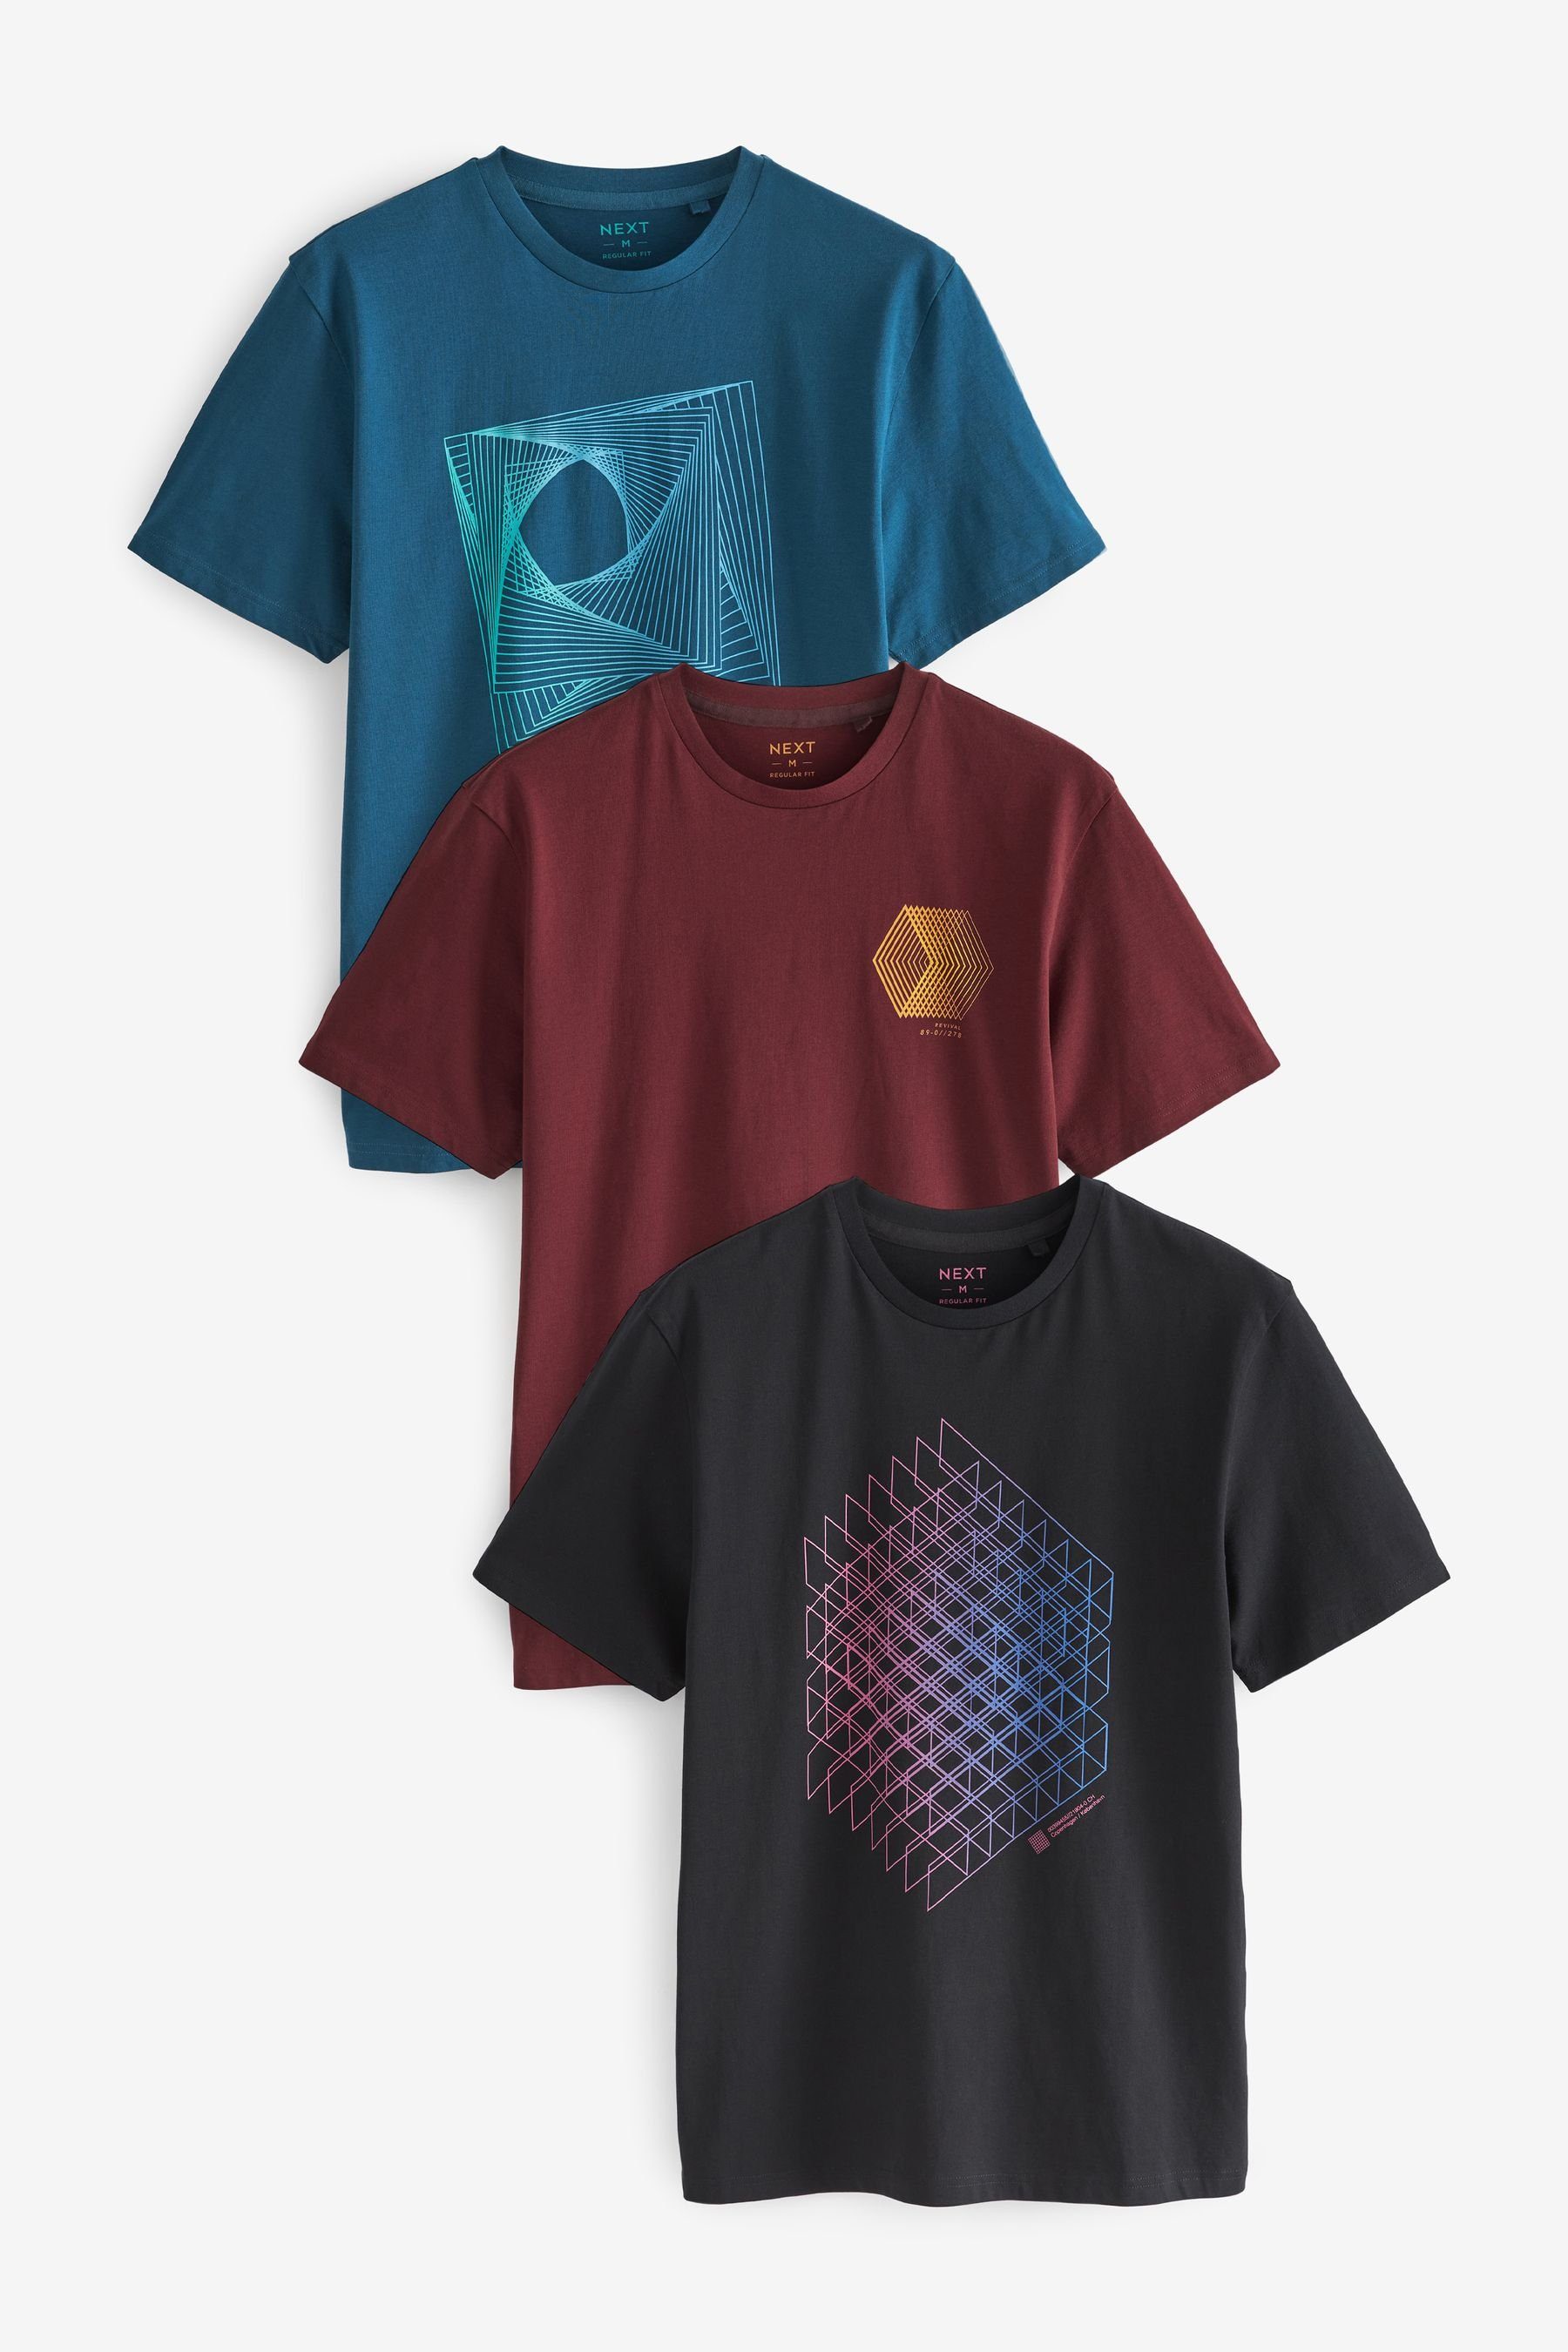 Next Print-Shirt Lines T-Shirt mit (3-tlg) Blue/Black/Rust Print-3er Pack